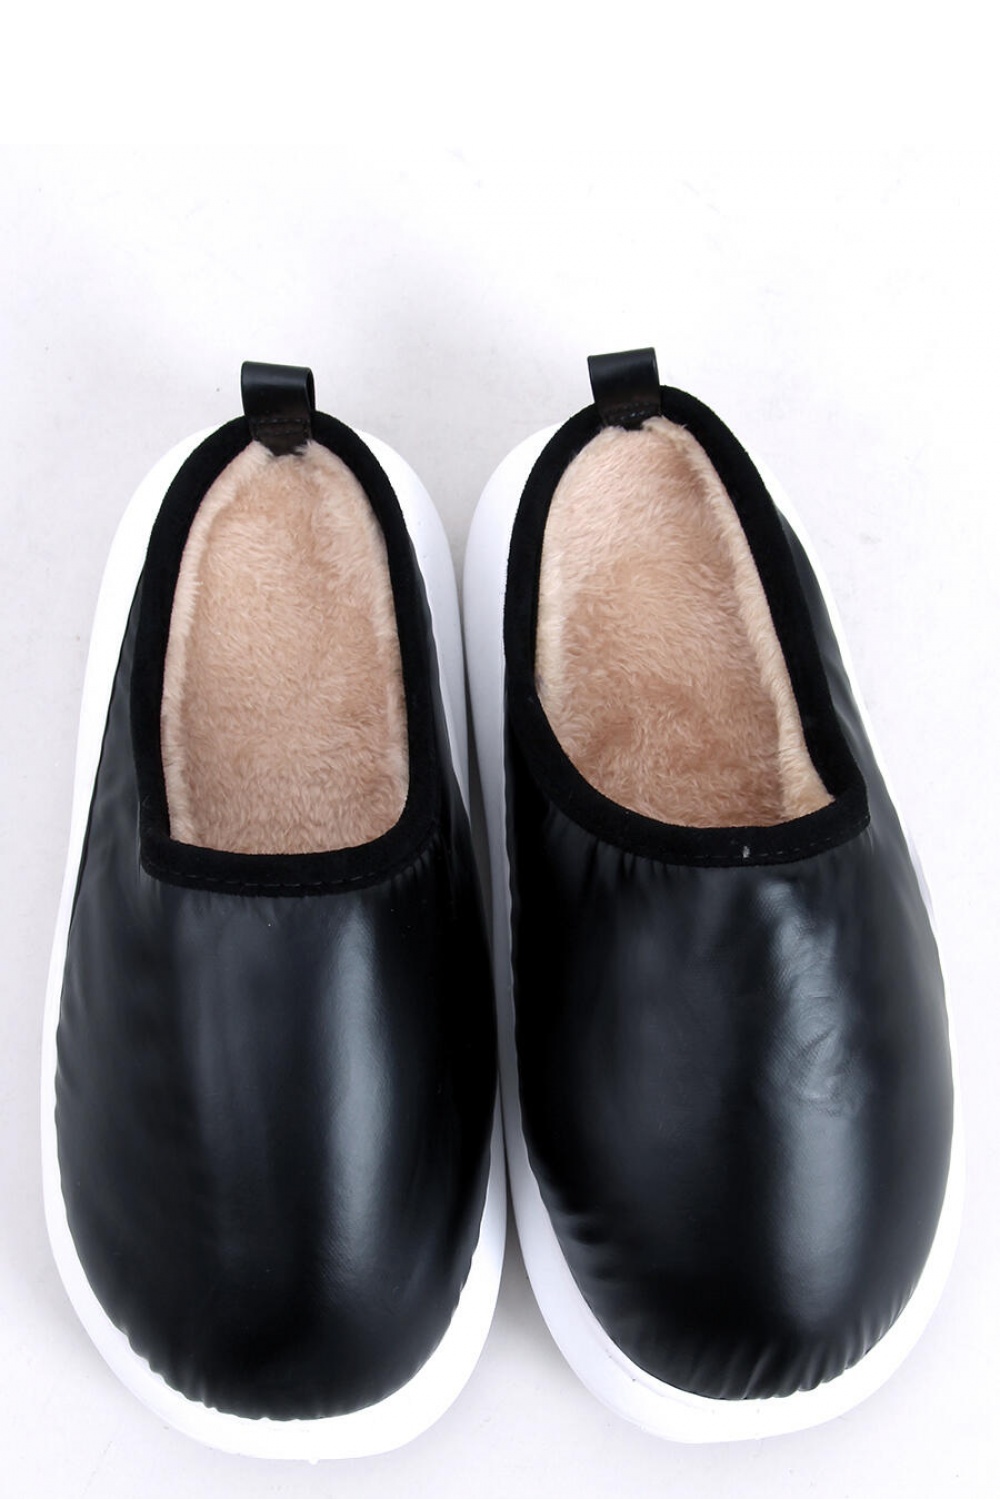  Slippers model 174501 Inello  black